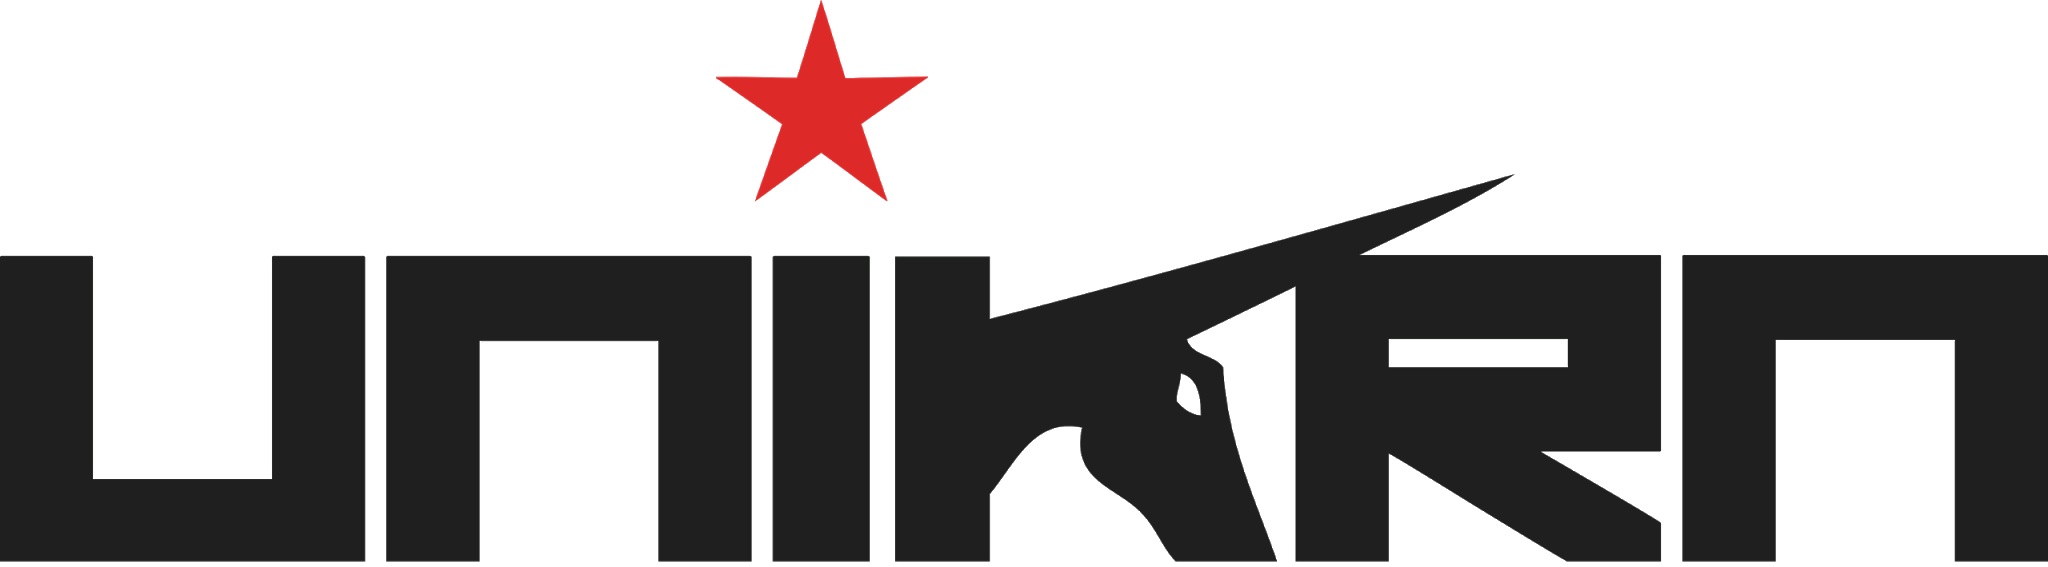 Unikrn Casino Logo